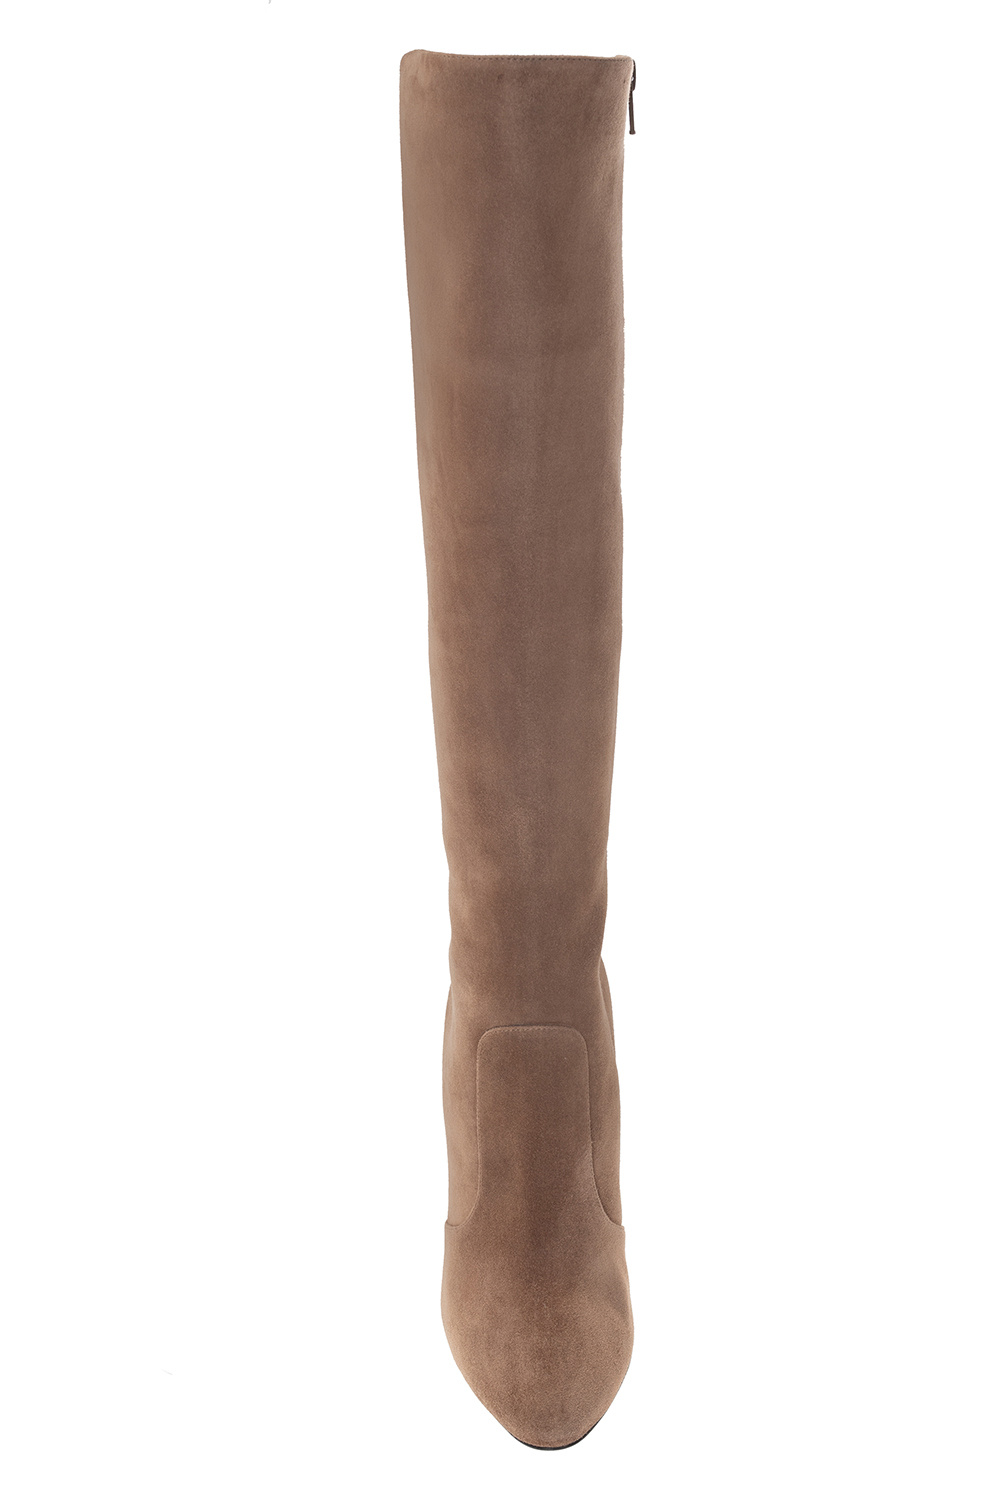 Saint Laurent ‘68’ heeled knee-high boots